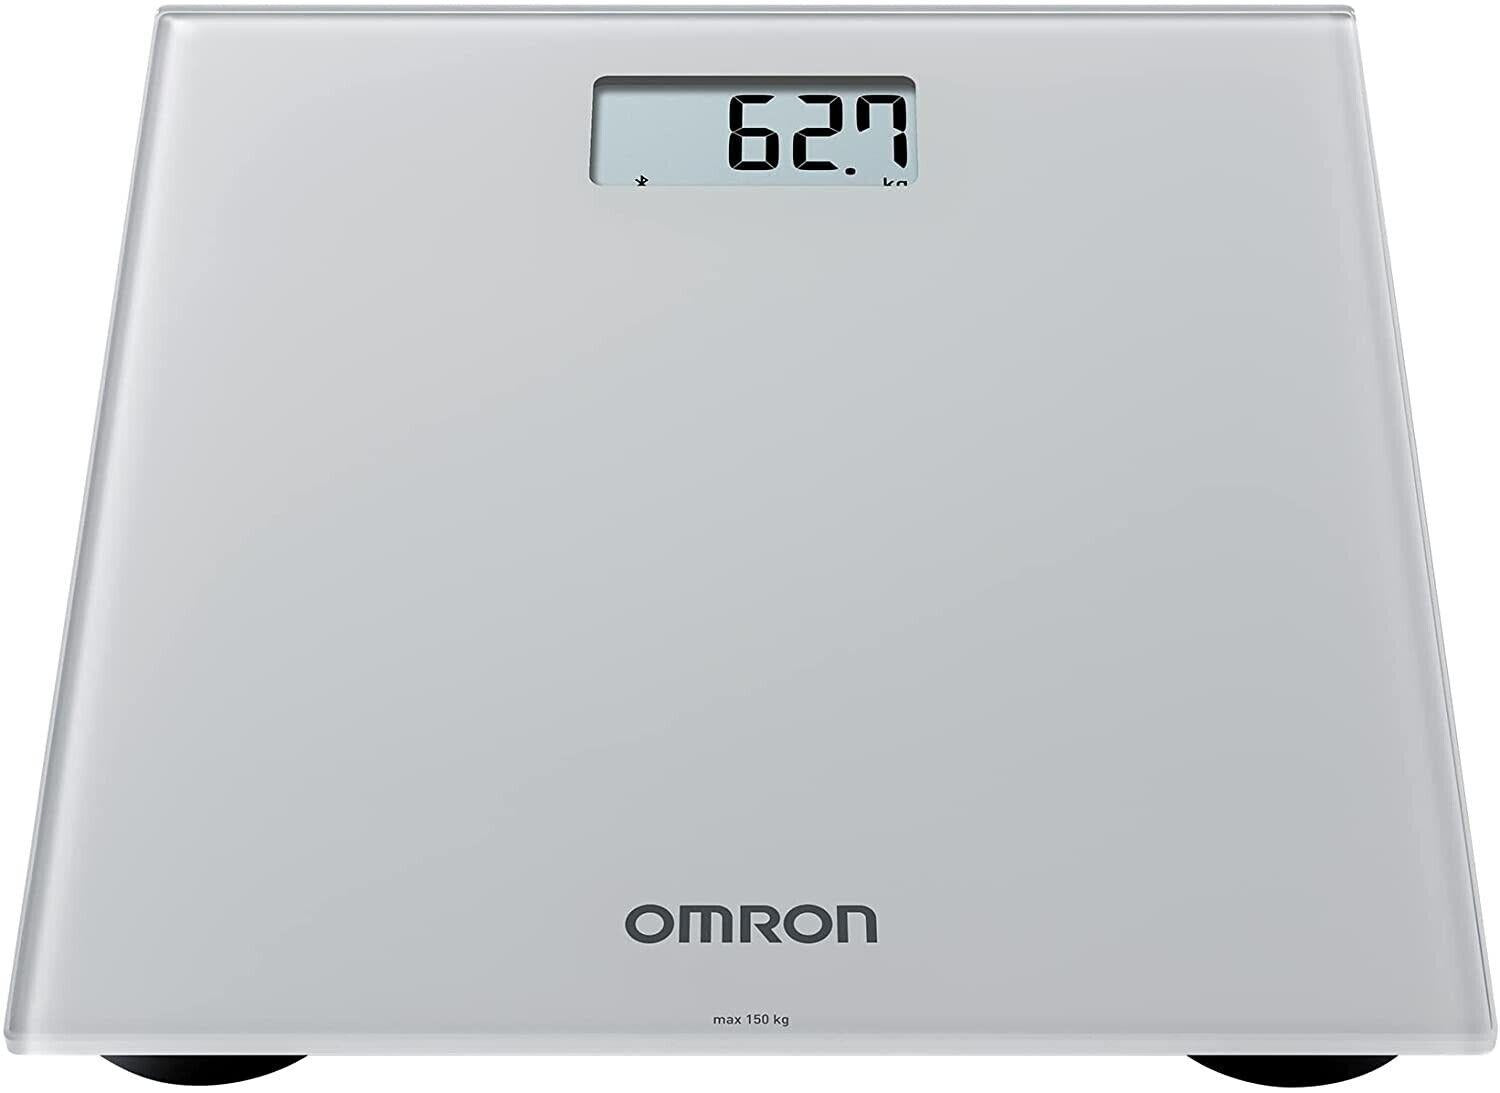 Omron Intelli IT Smart Bathroom Digital Scales for Body Weight HN300T2-EGY